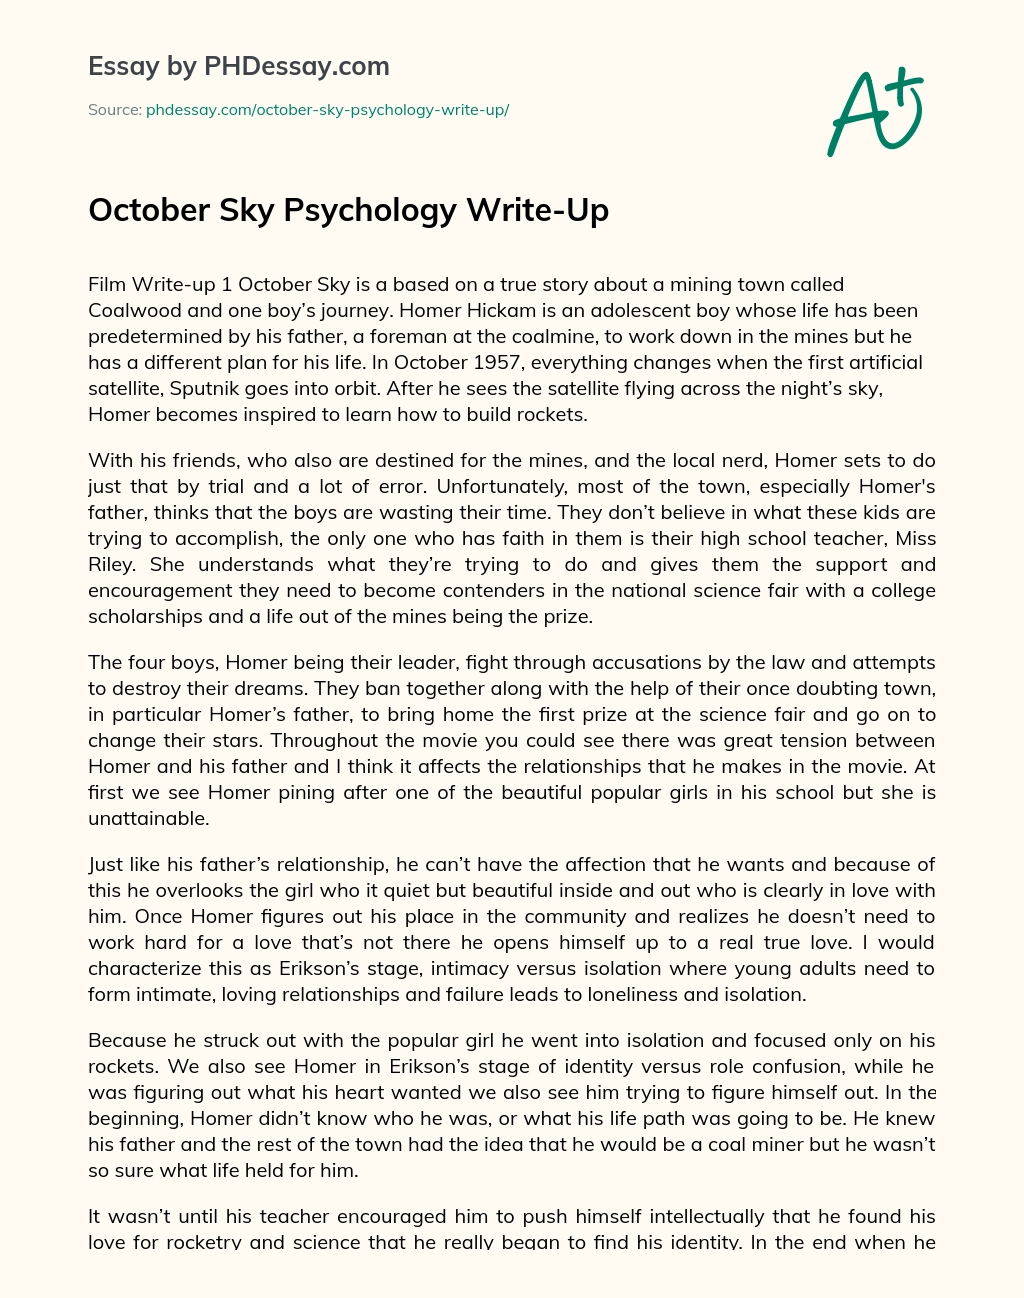 October Sky Psychology Write-Up essay